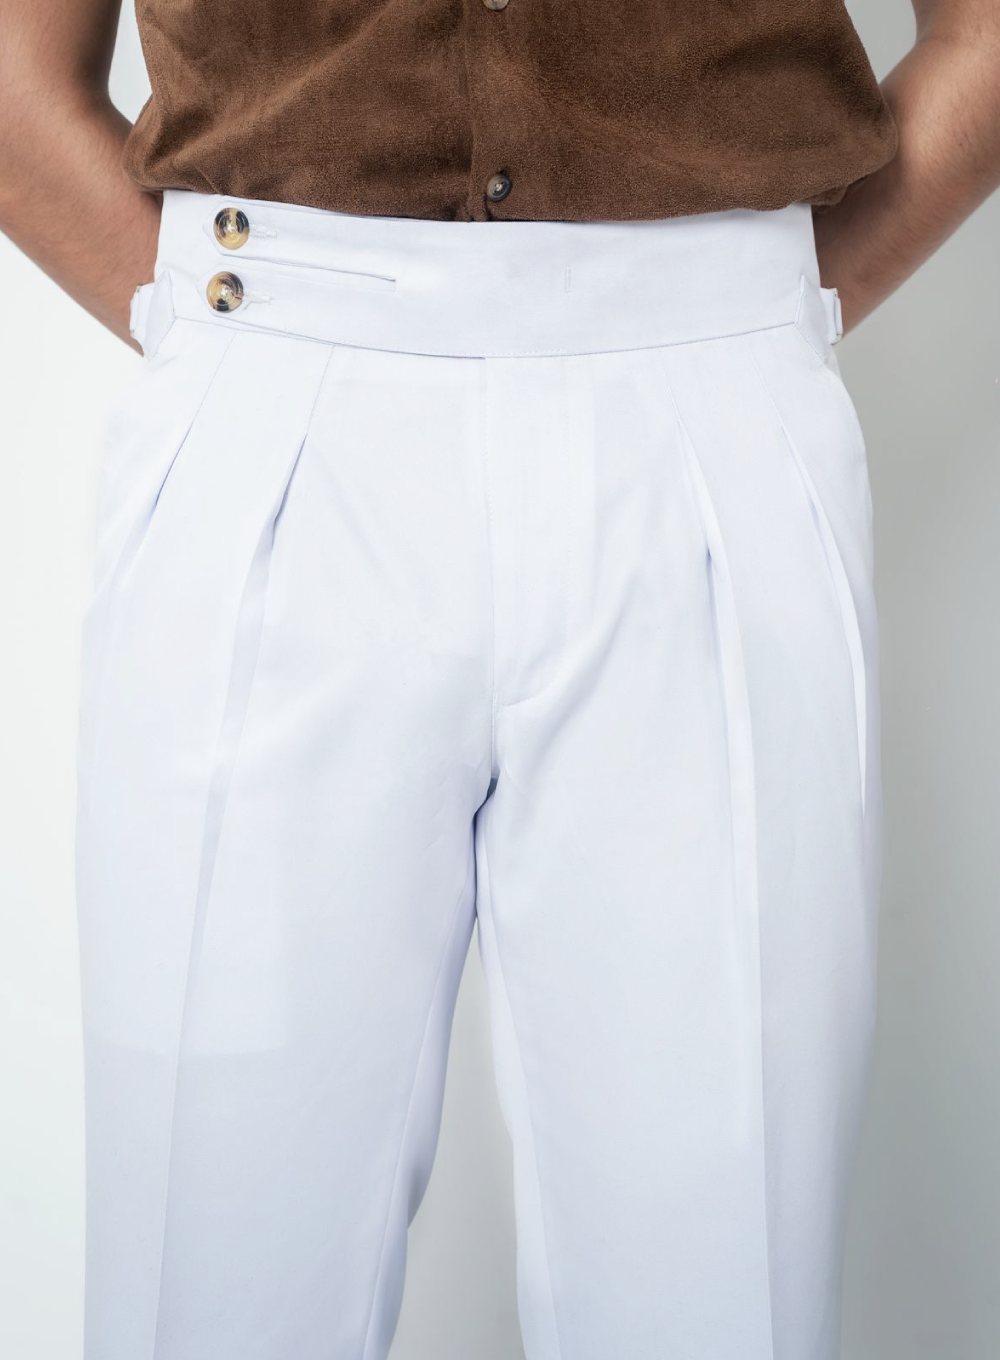 Pristine White Gurkha Trousers